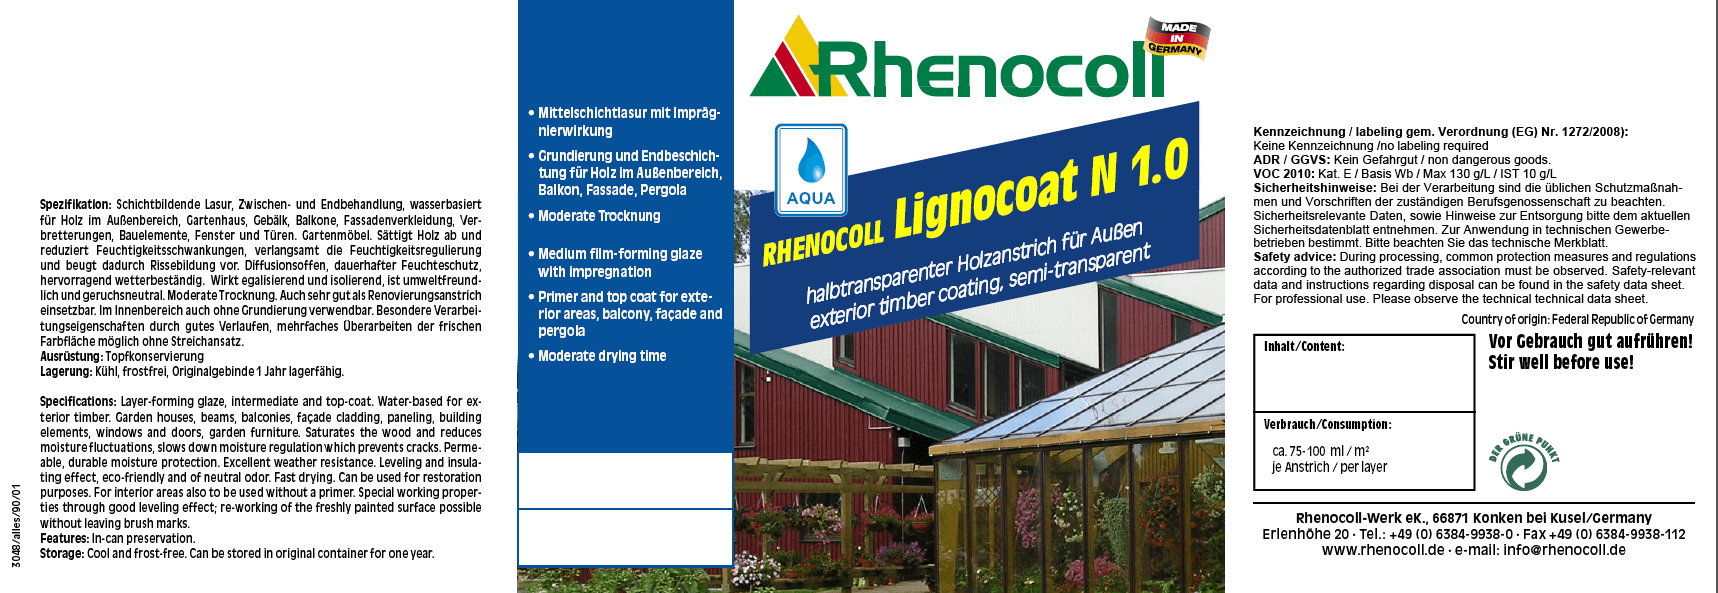 Rhenocoll Lignocoat N 1.0  